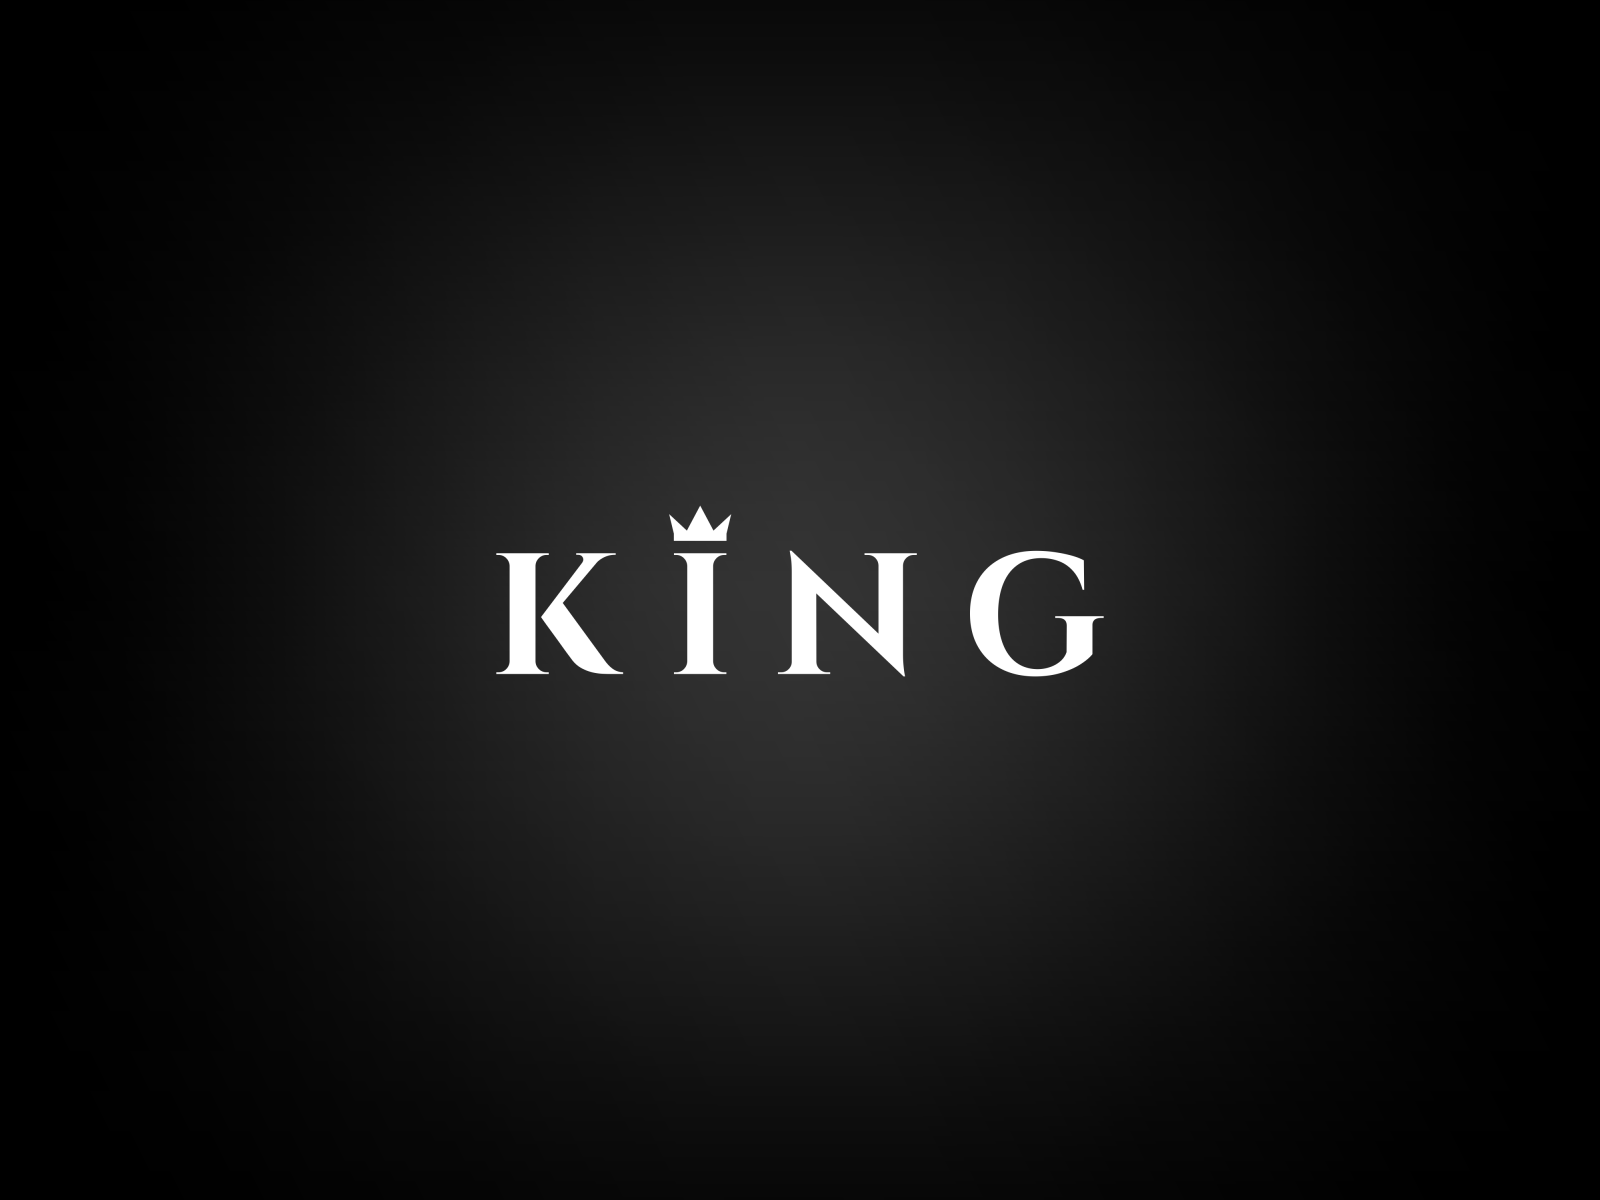 KING logo design by imazinator studio on Dribbble